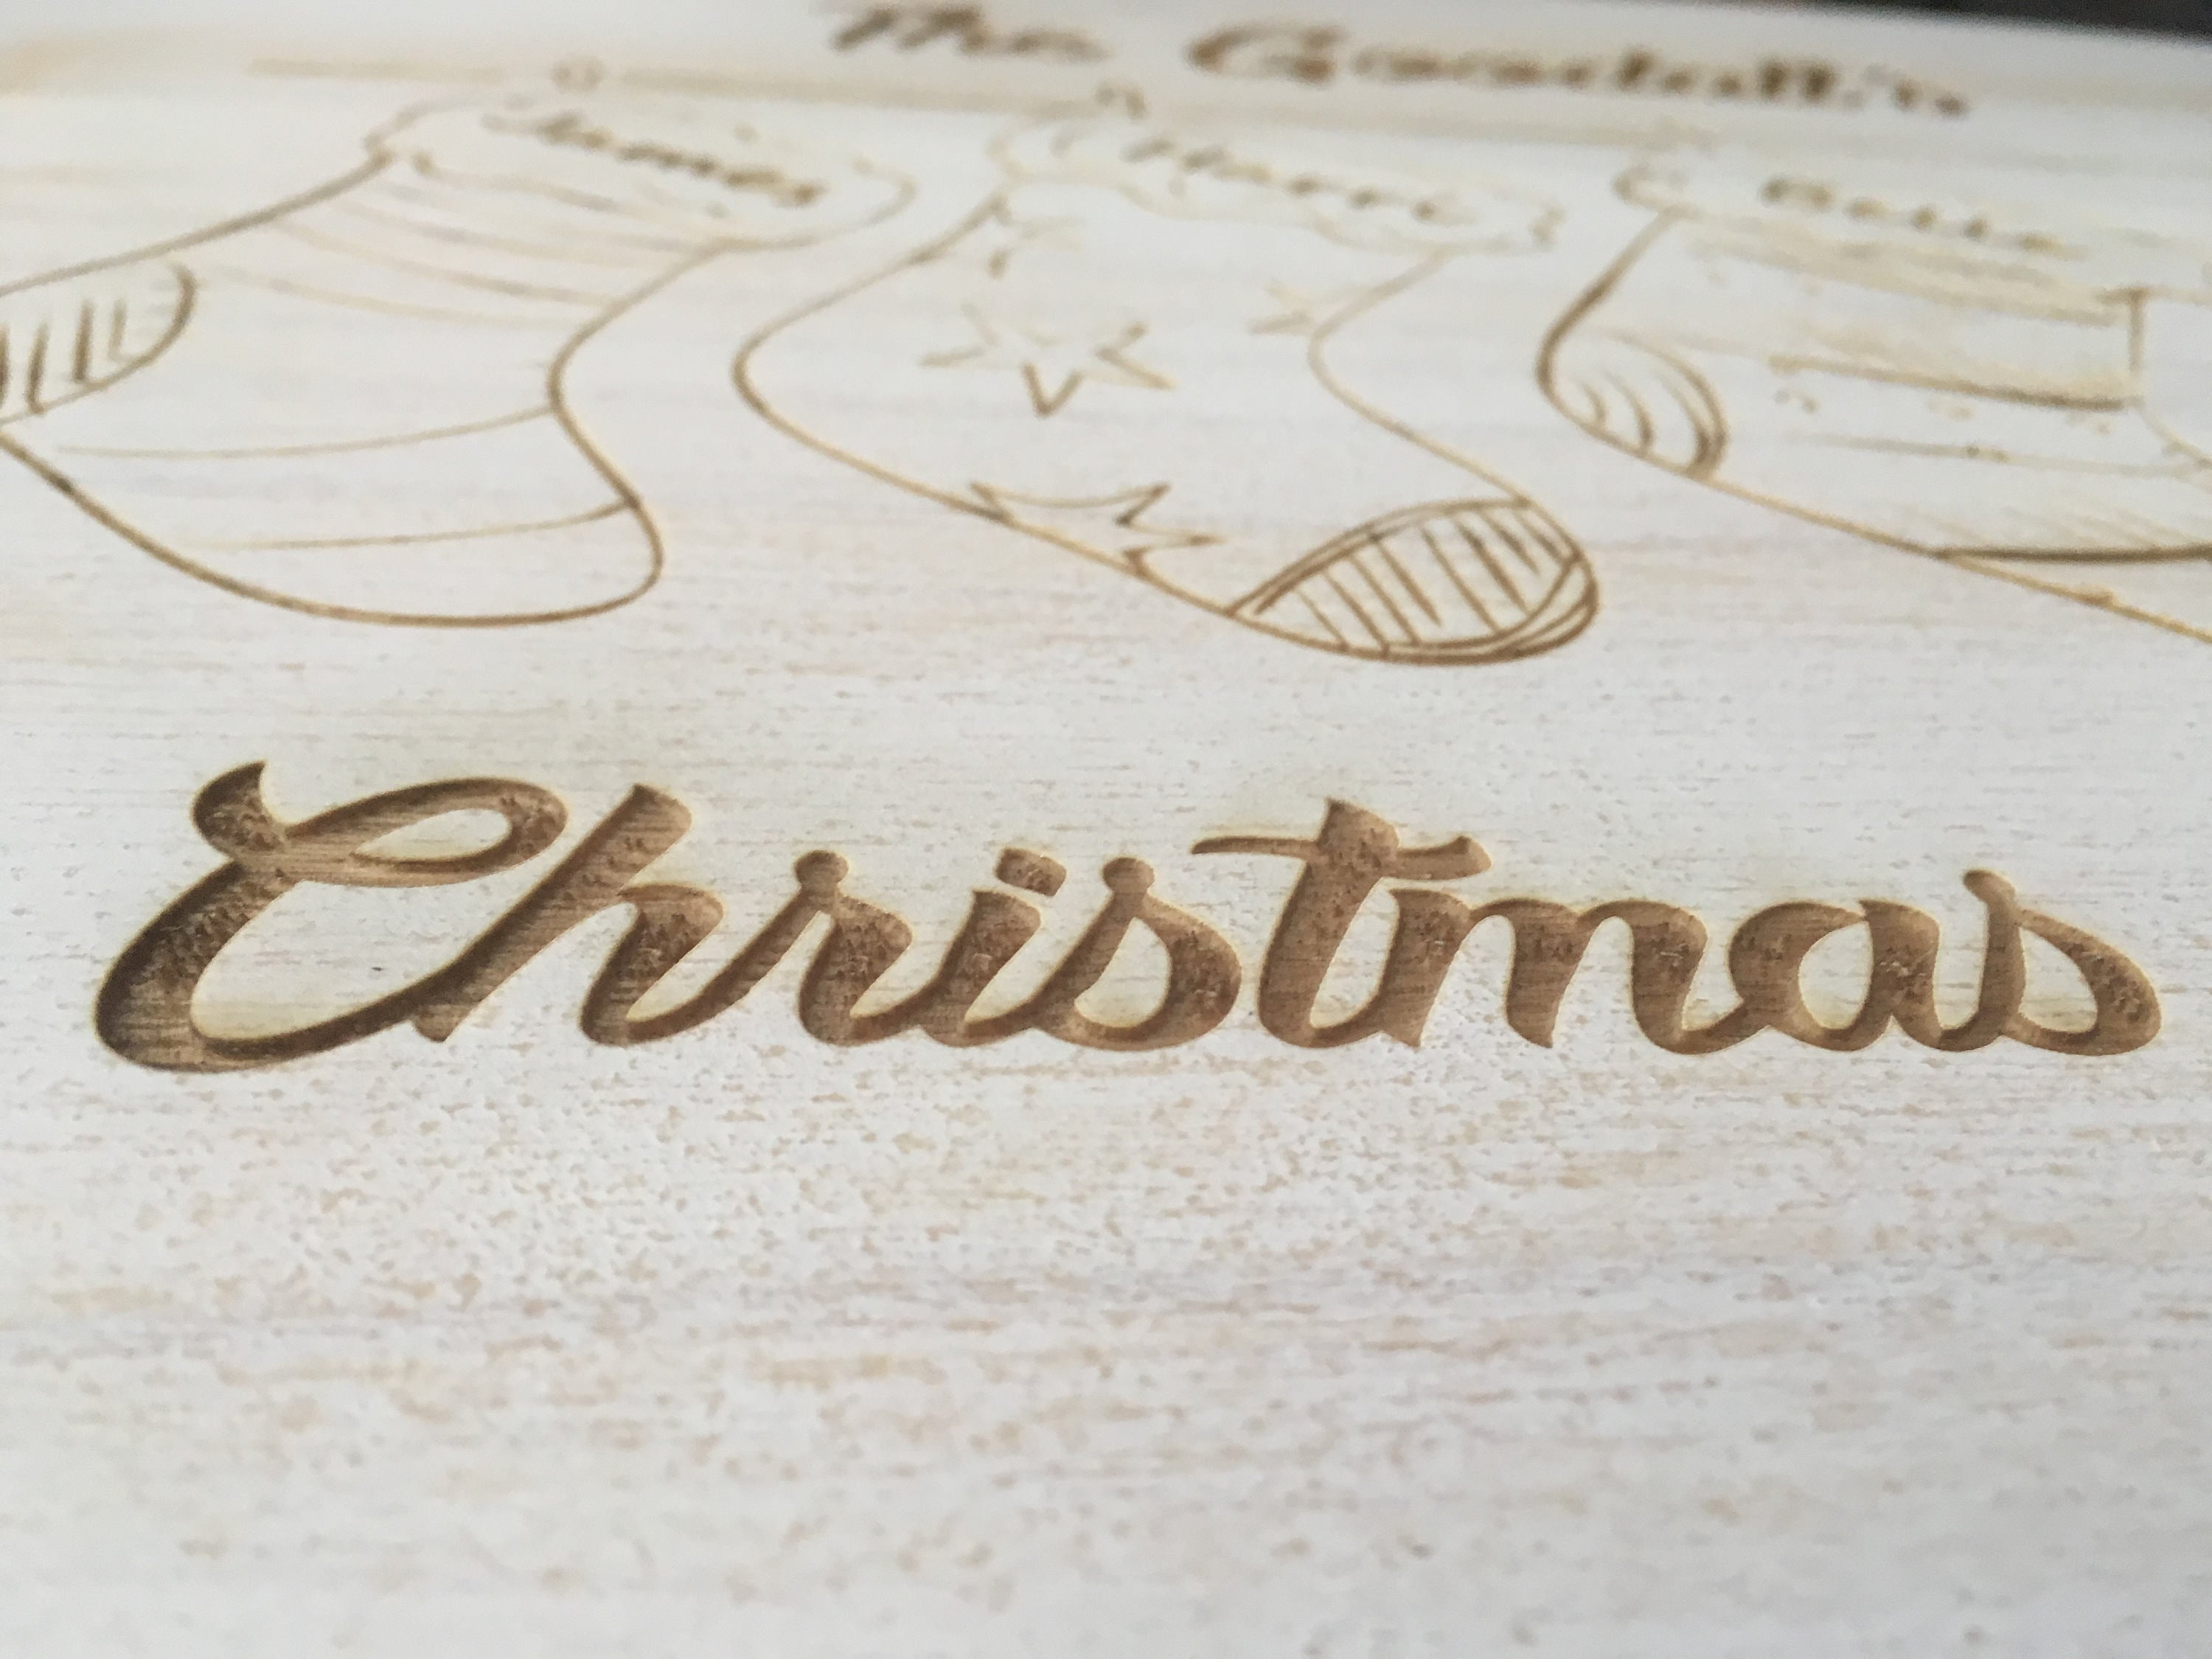 Personalised Christmas Eve Box Family Size  Stockings/Rustic White Box/Memory Box/Personalised Xmas Box/Personalised Family Box/Best Selling